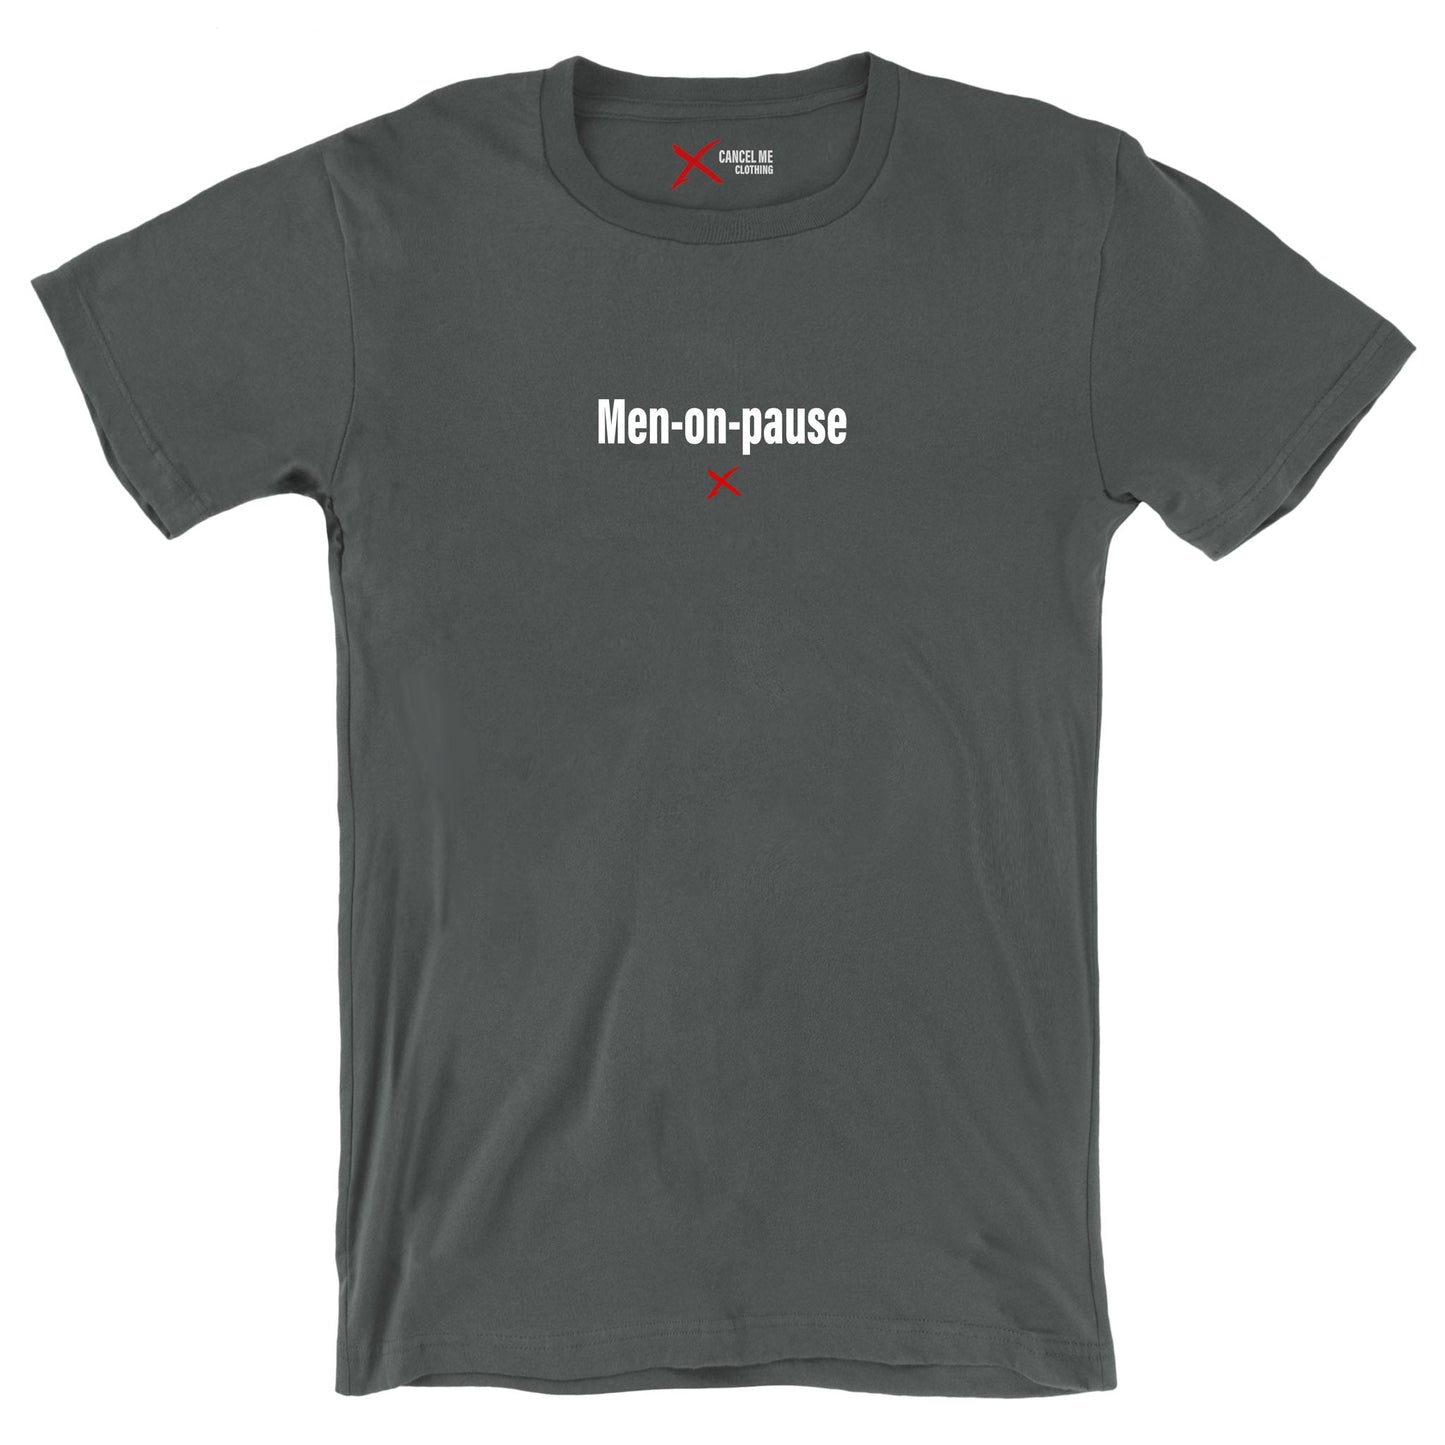 Men-on-pause - Shirt